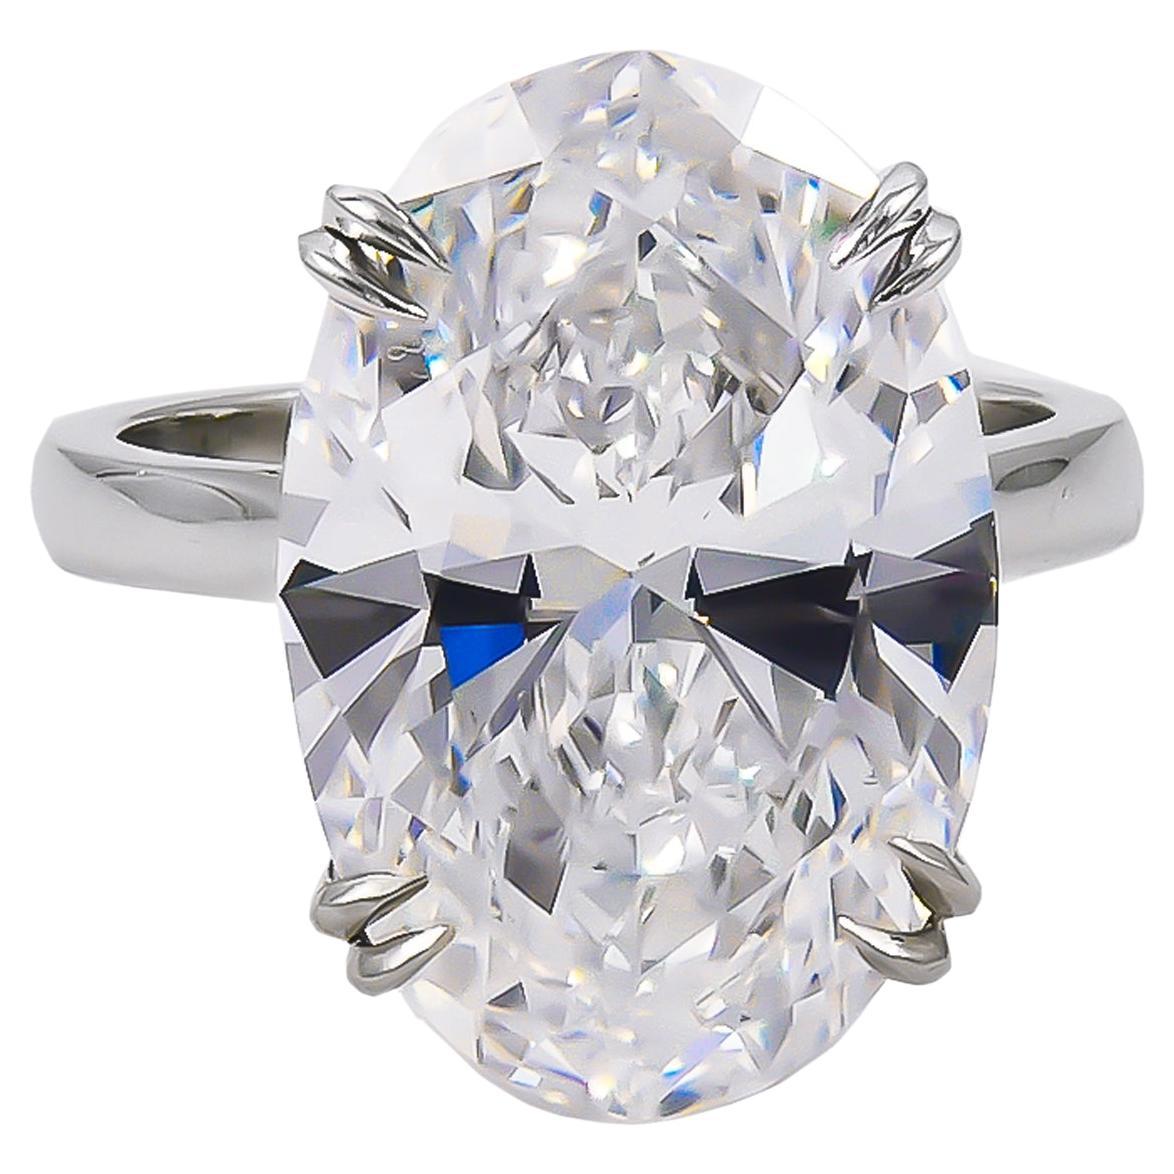 Spectra Fine Jewelry, bague de fiançailles avec diamant ovale certifié GIA de 11,19 carats